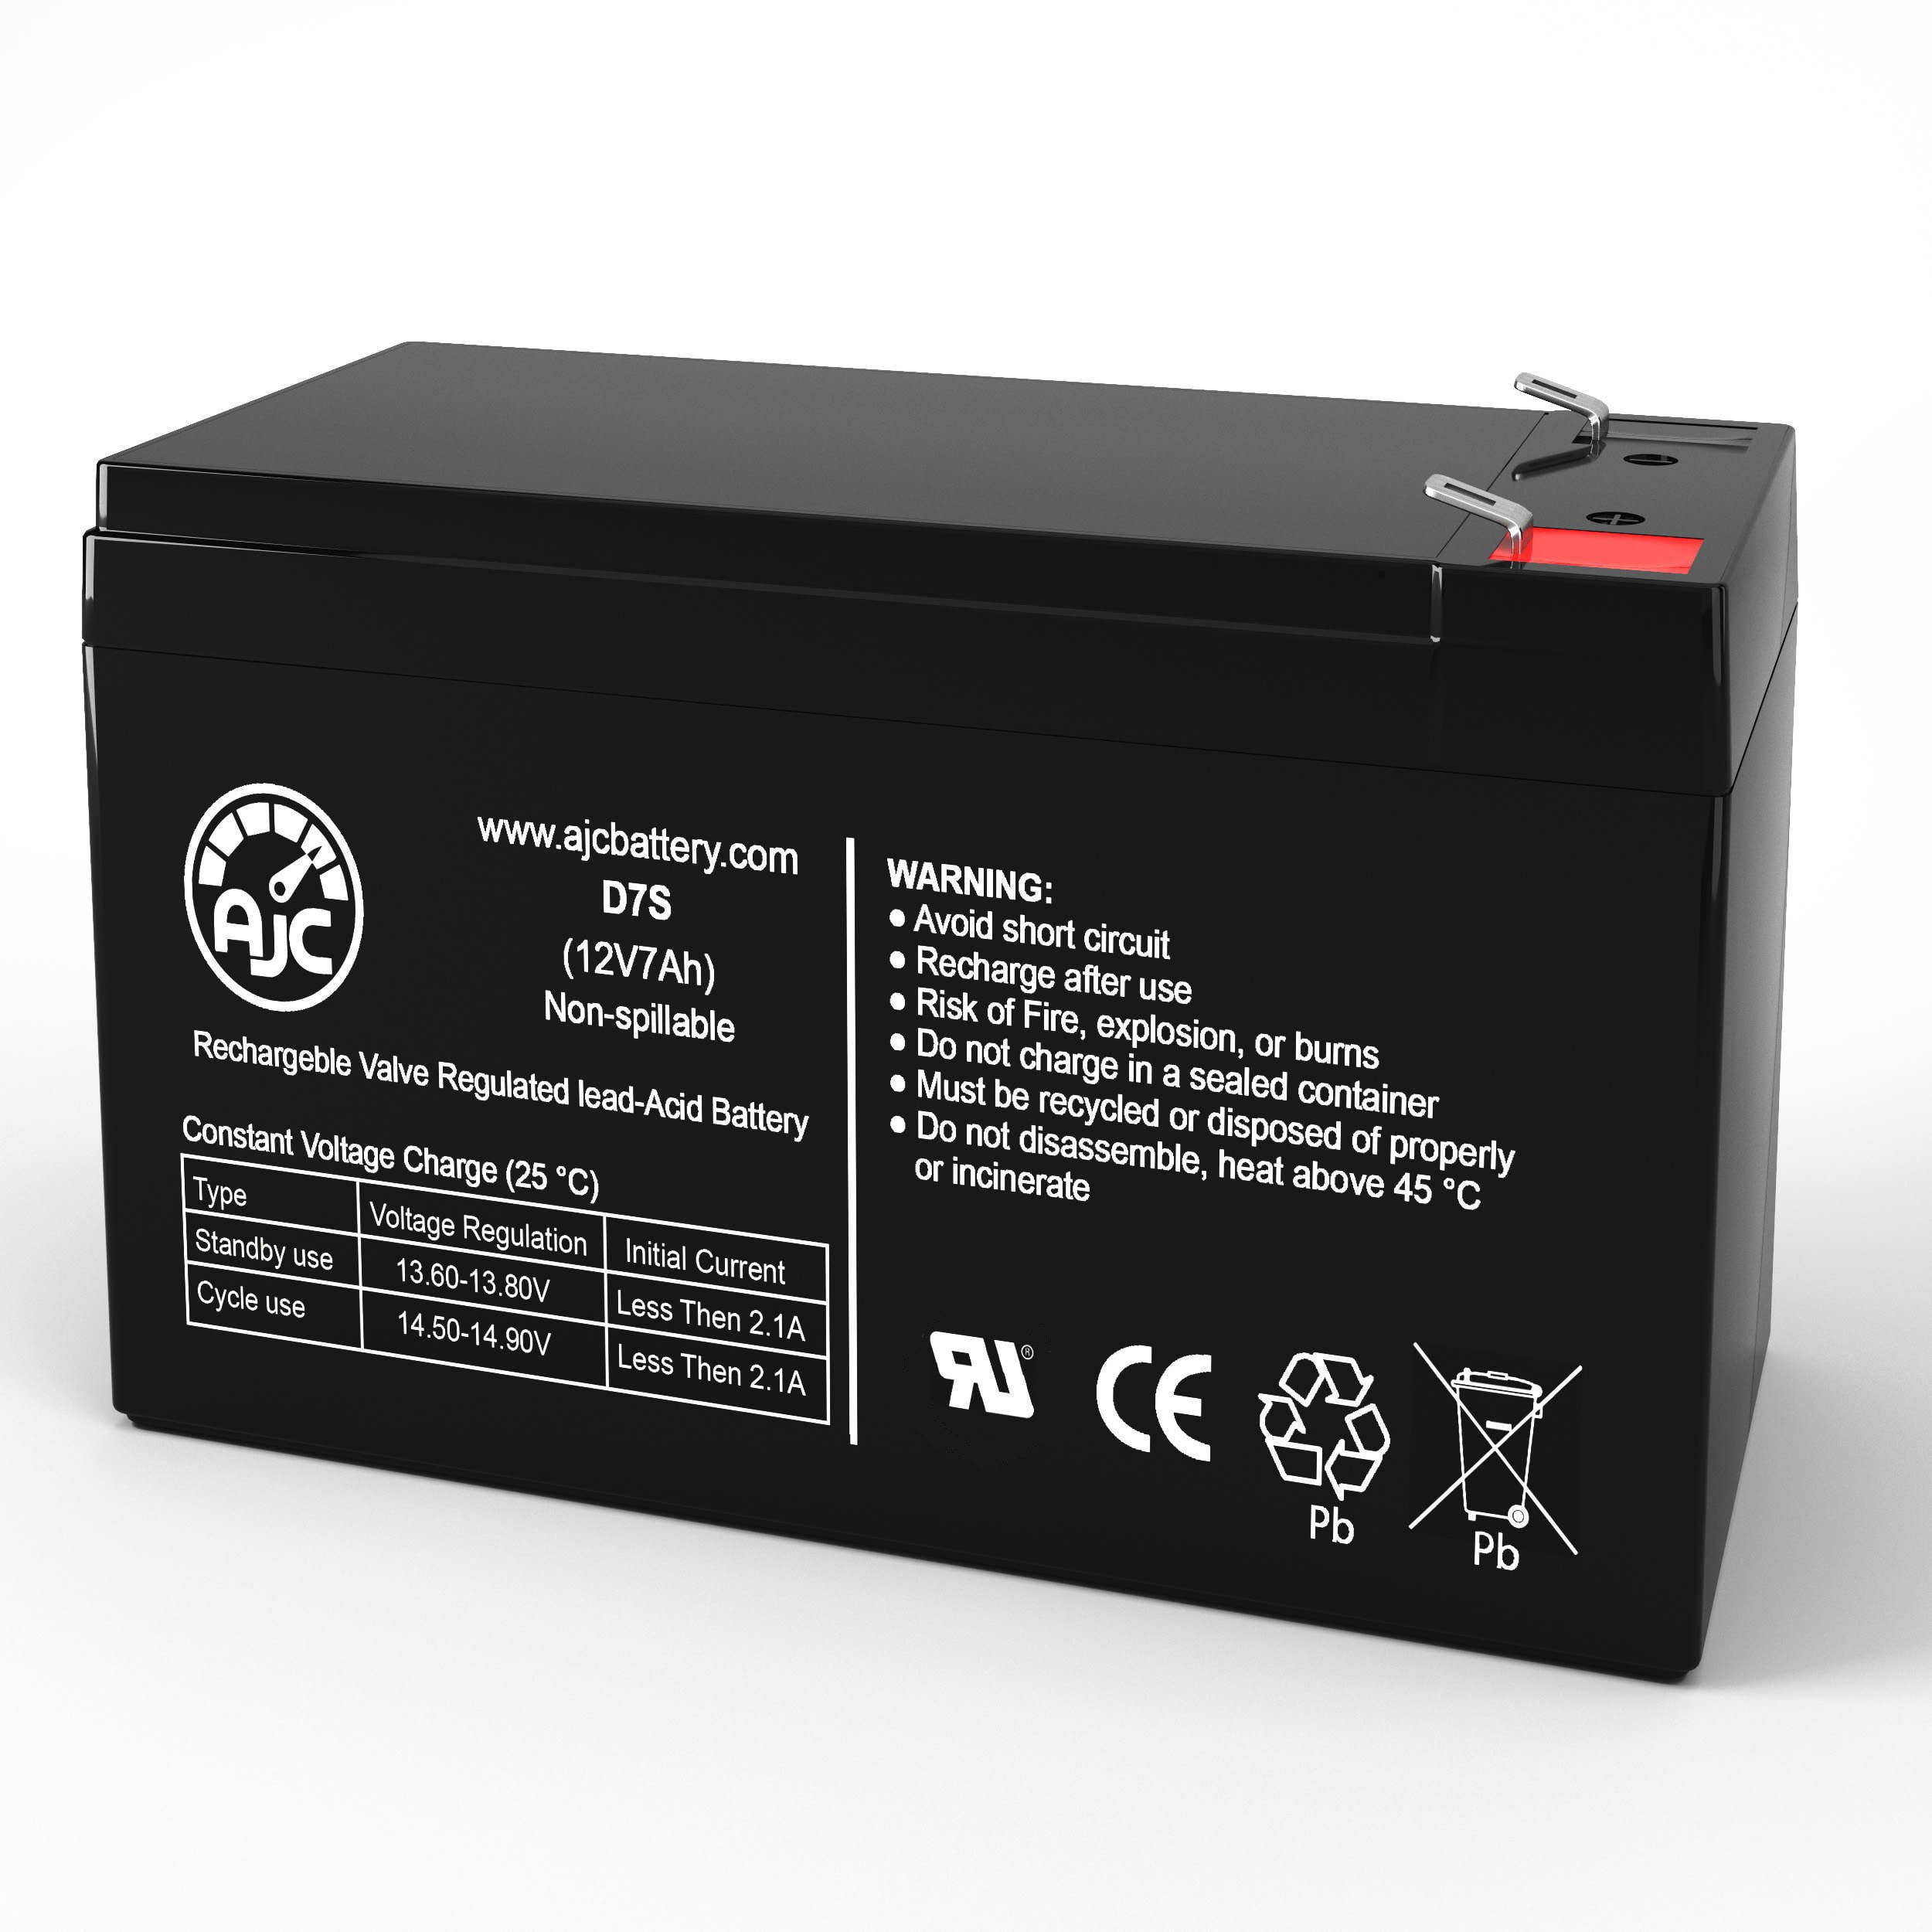 This is an AJC Brand Replacement Tripp Lite OMNISMART1400 12V 7Ah UPS Battery